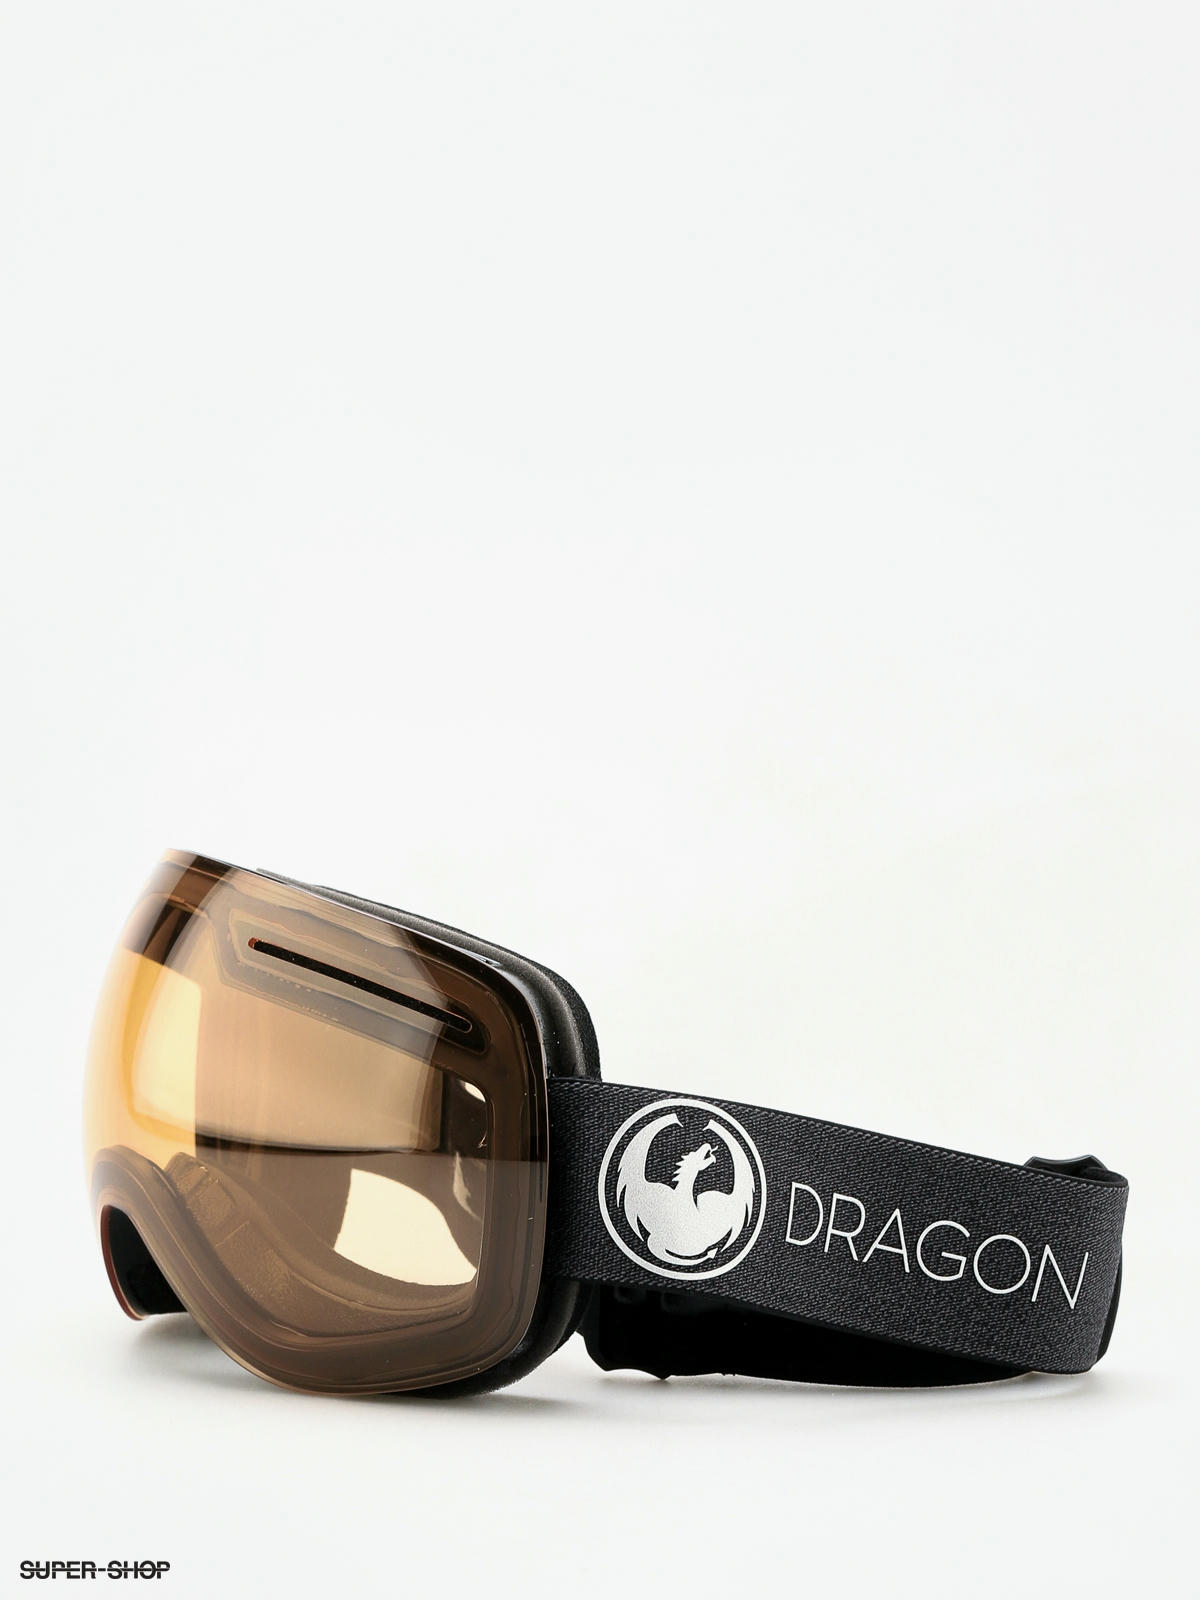 Dragon X1 Goggles (echo/transitions amber)